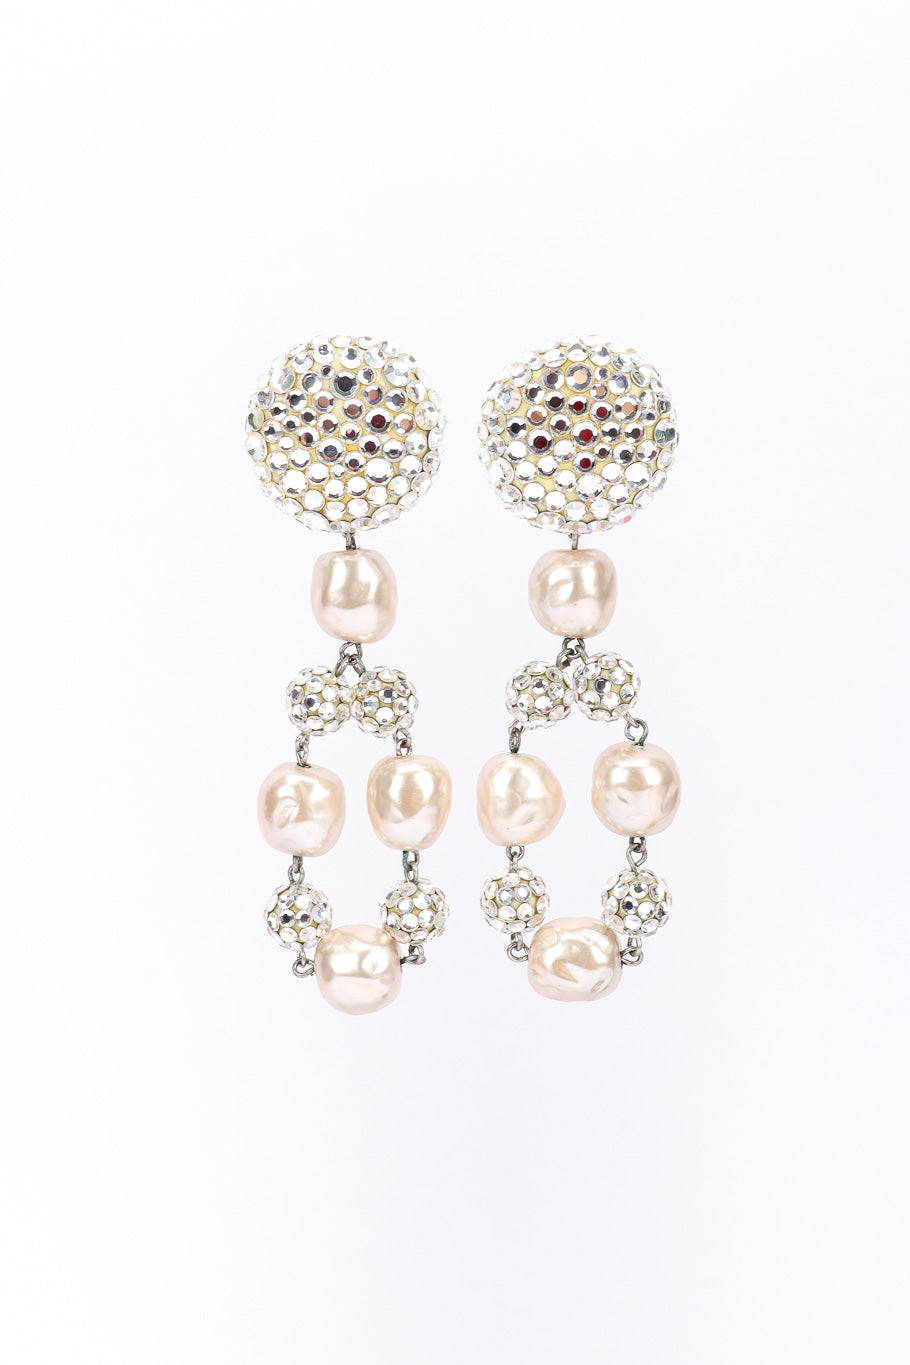 Pearl drop earrings by James Arpad on white background side by side @recessla